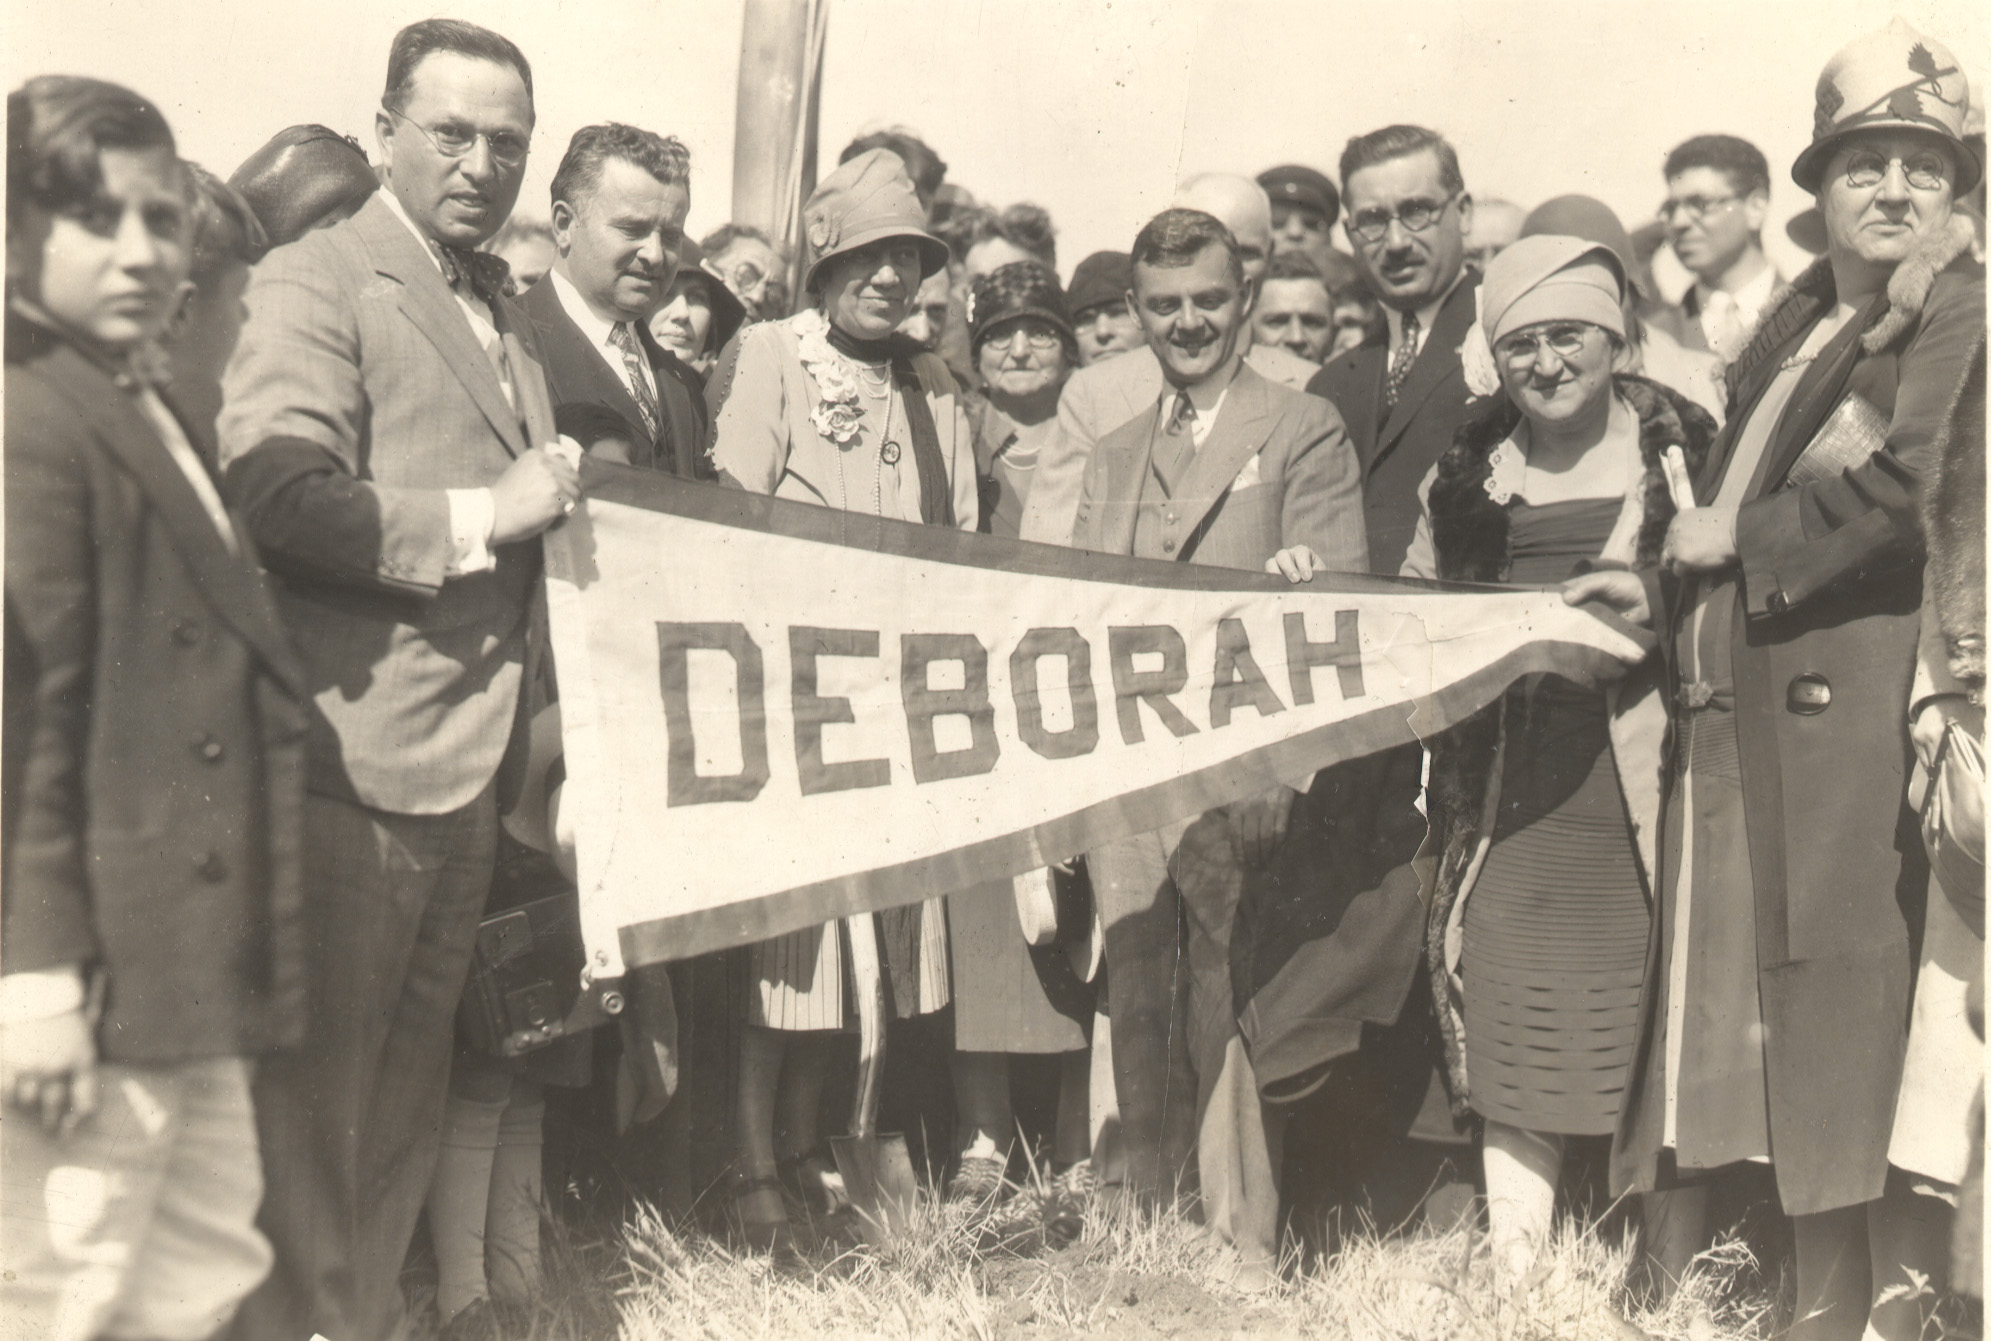 Crowd with Deborah sign